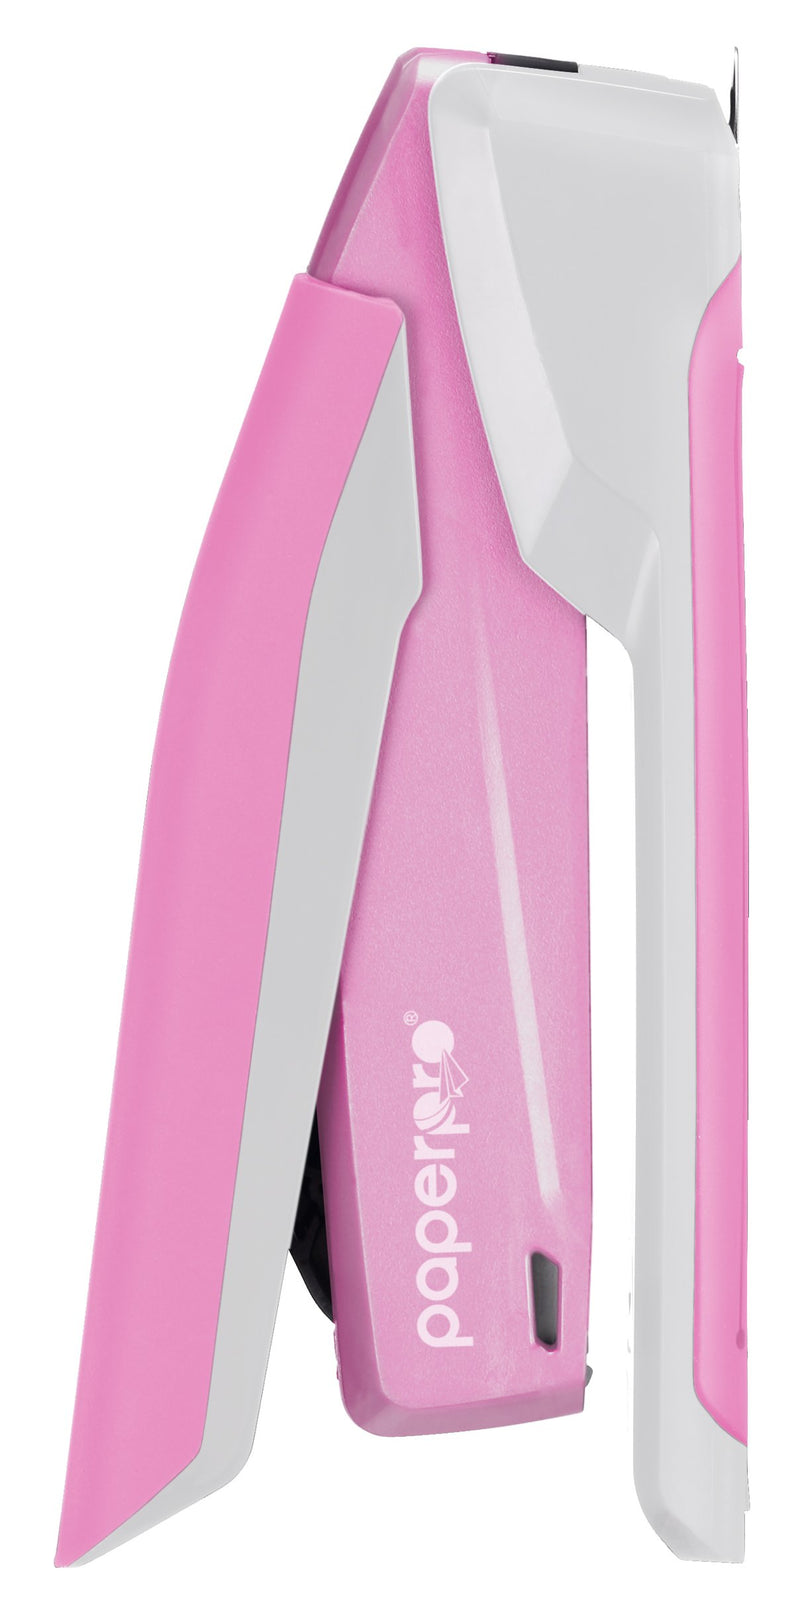 Bostitch InPower Spring-Powered Desktop Stapler, Breast Cancer Awareness Pink (1188)